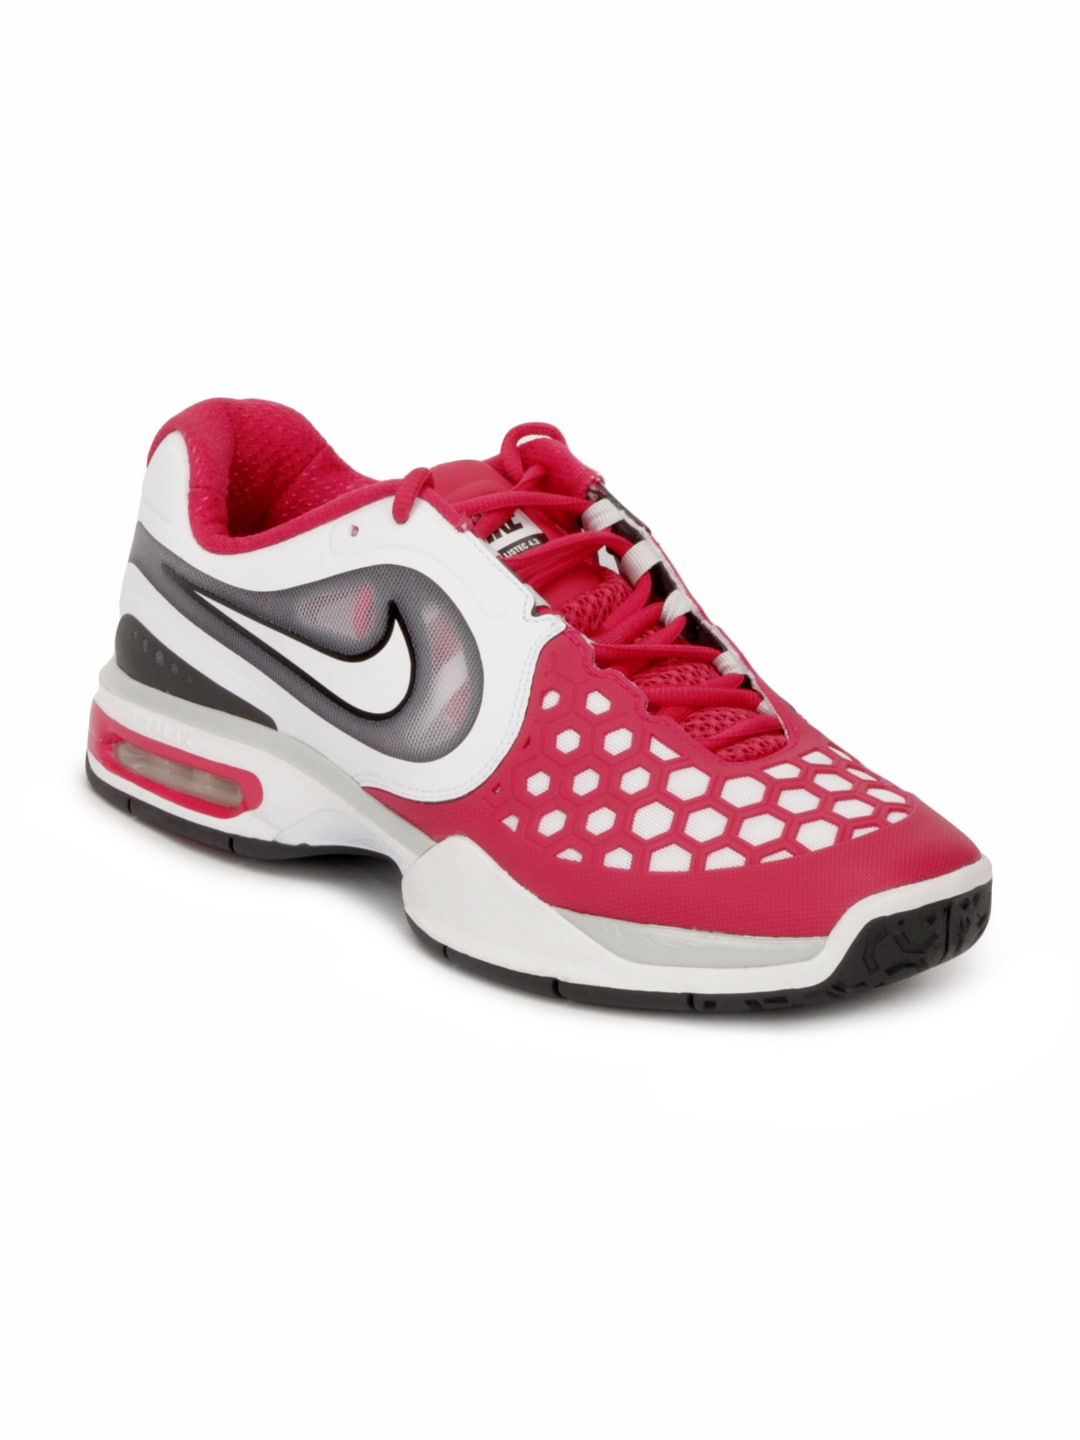 Nike Men Air Max Courtballistec Red Sports Shoes